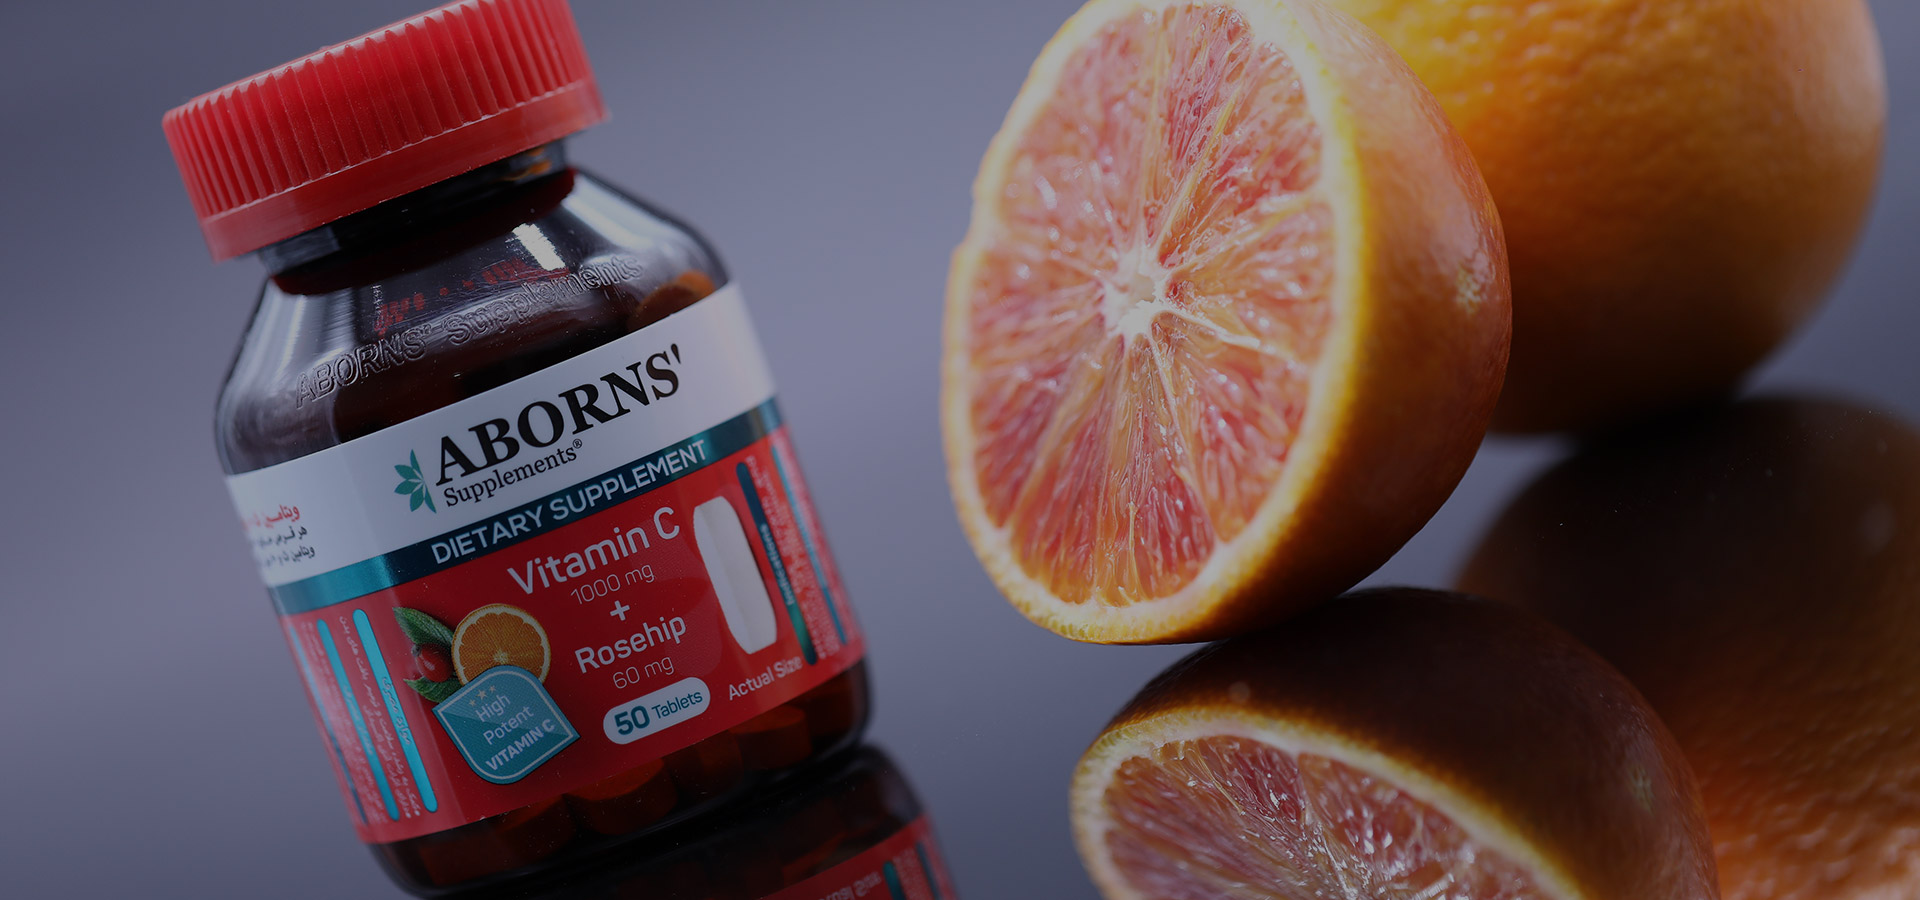 slider-aborns-vitaminc-and-rosehip-1